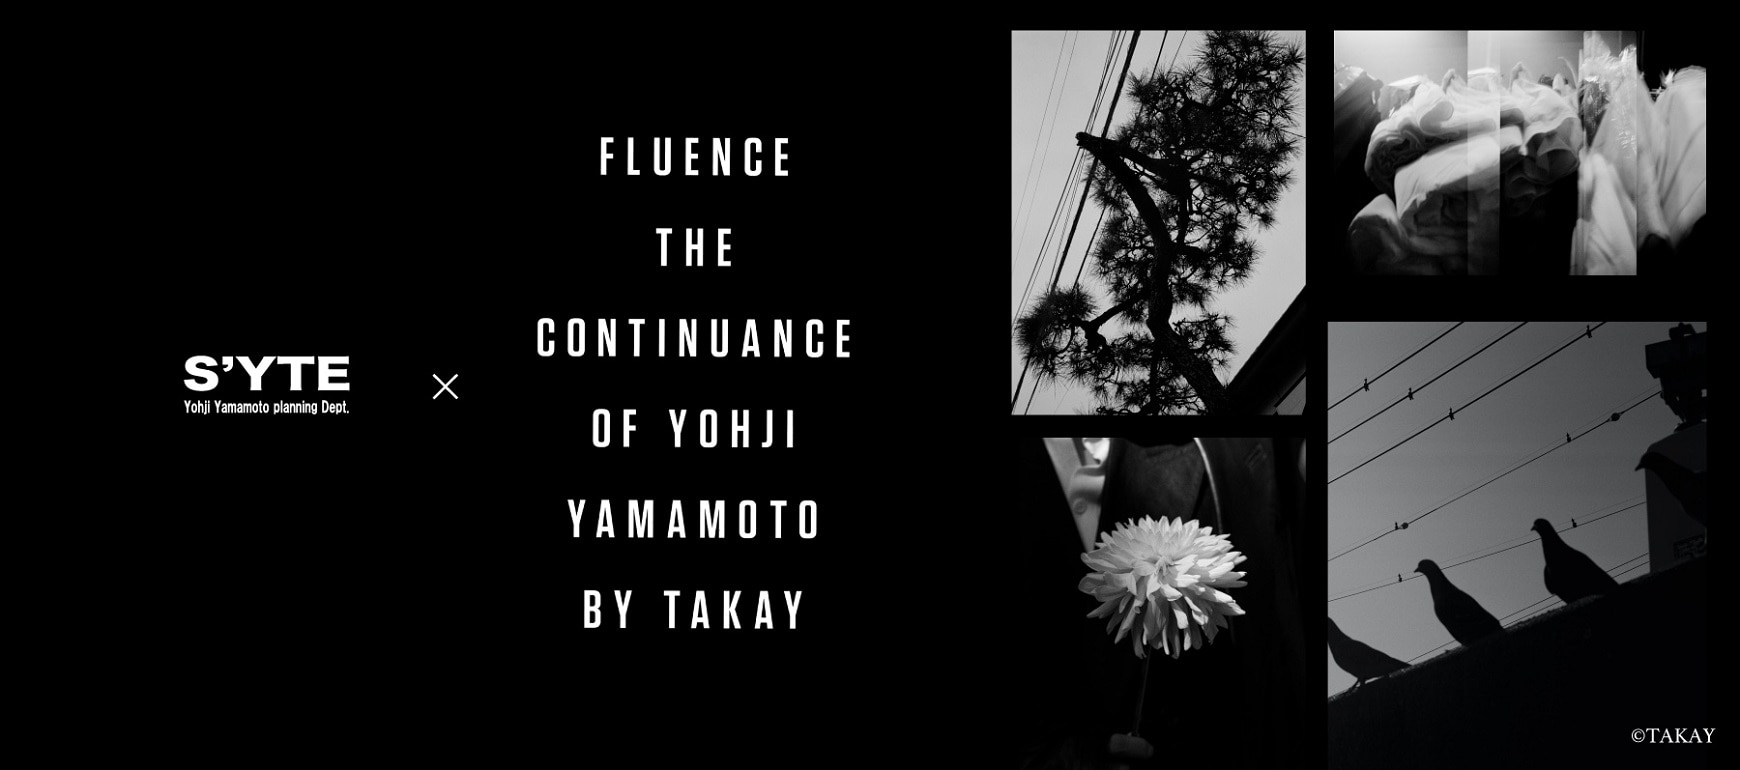 S’YTE × Fluence -The Continuance of Yohji Yamamoto by TAKAY-